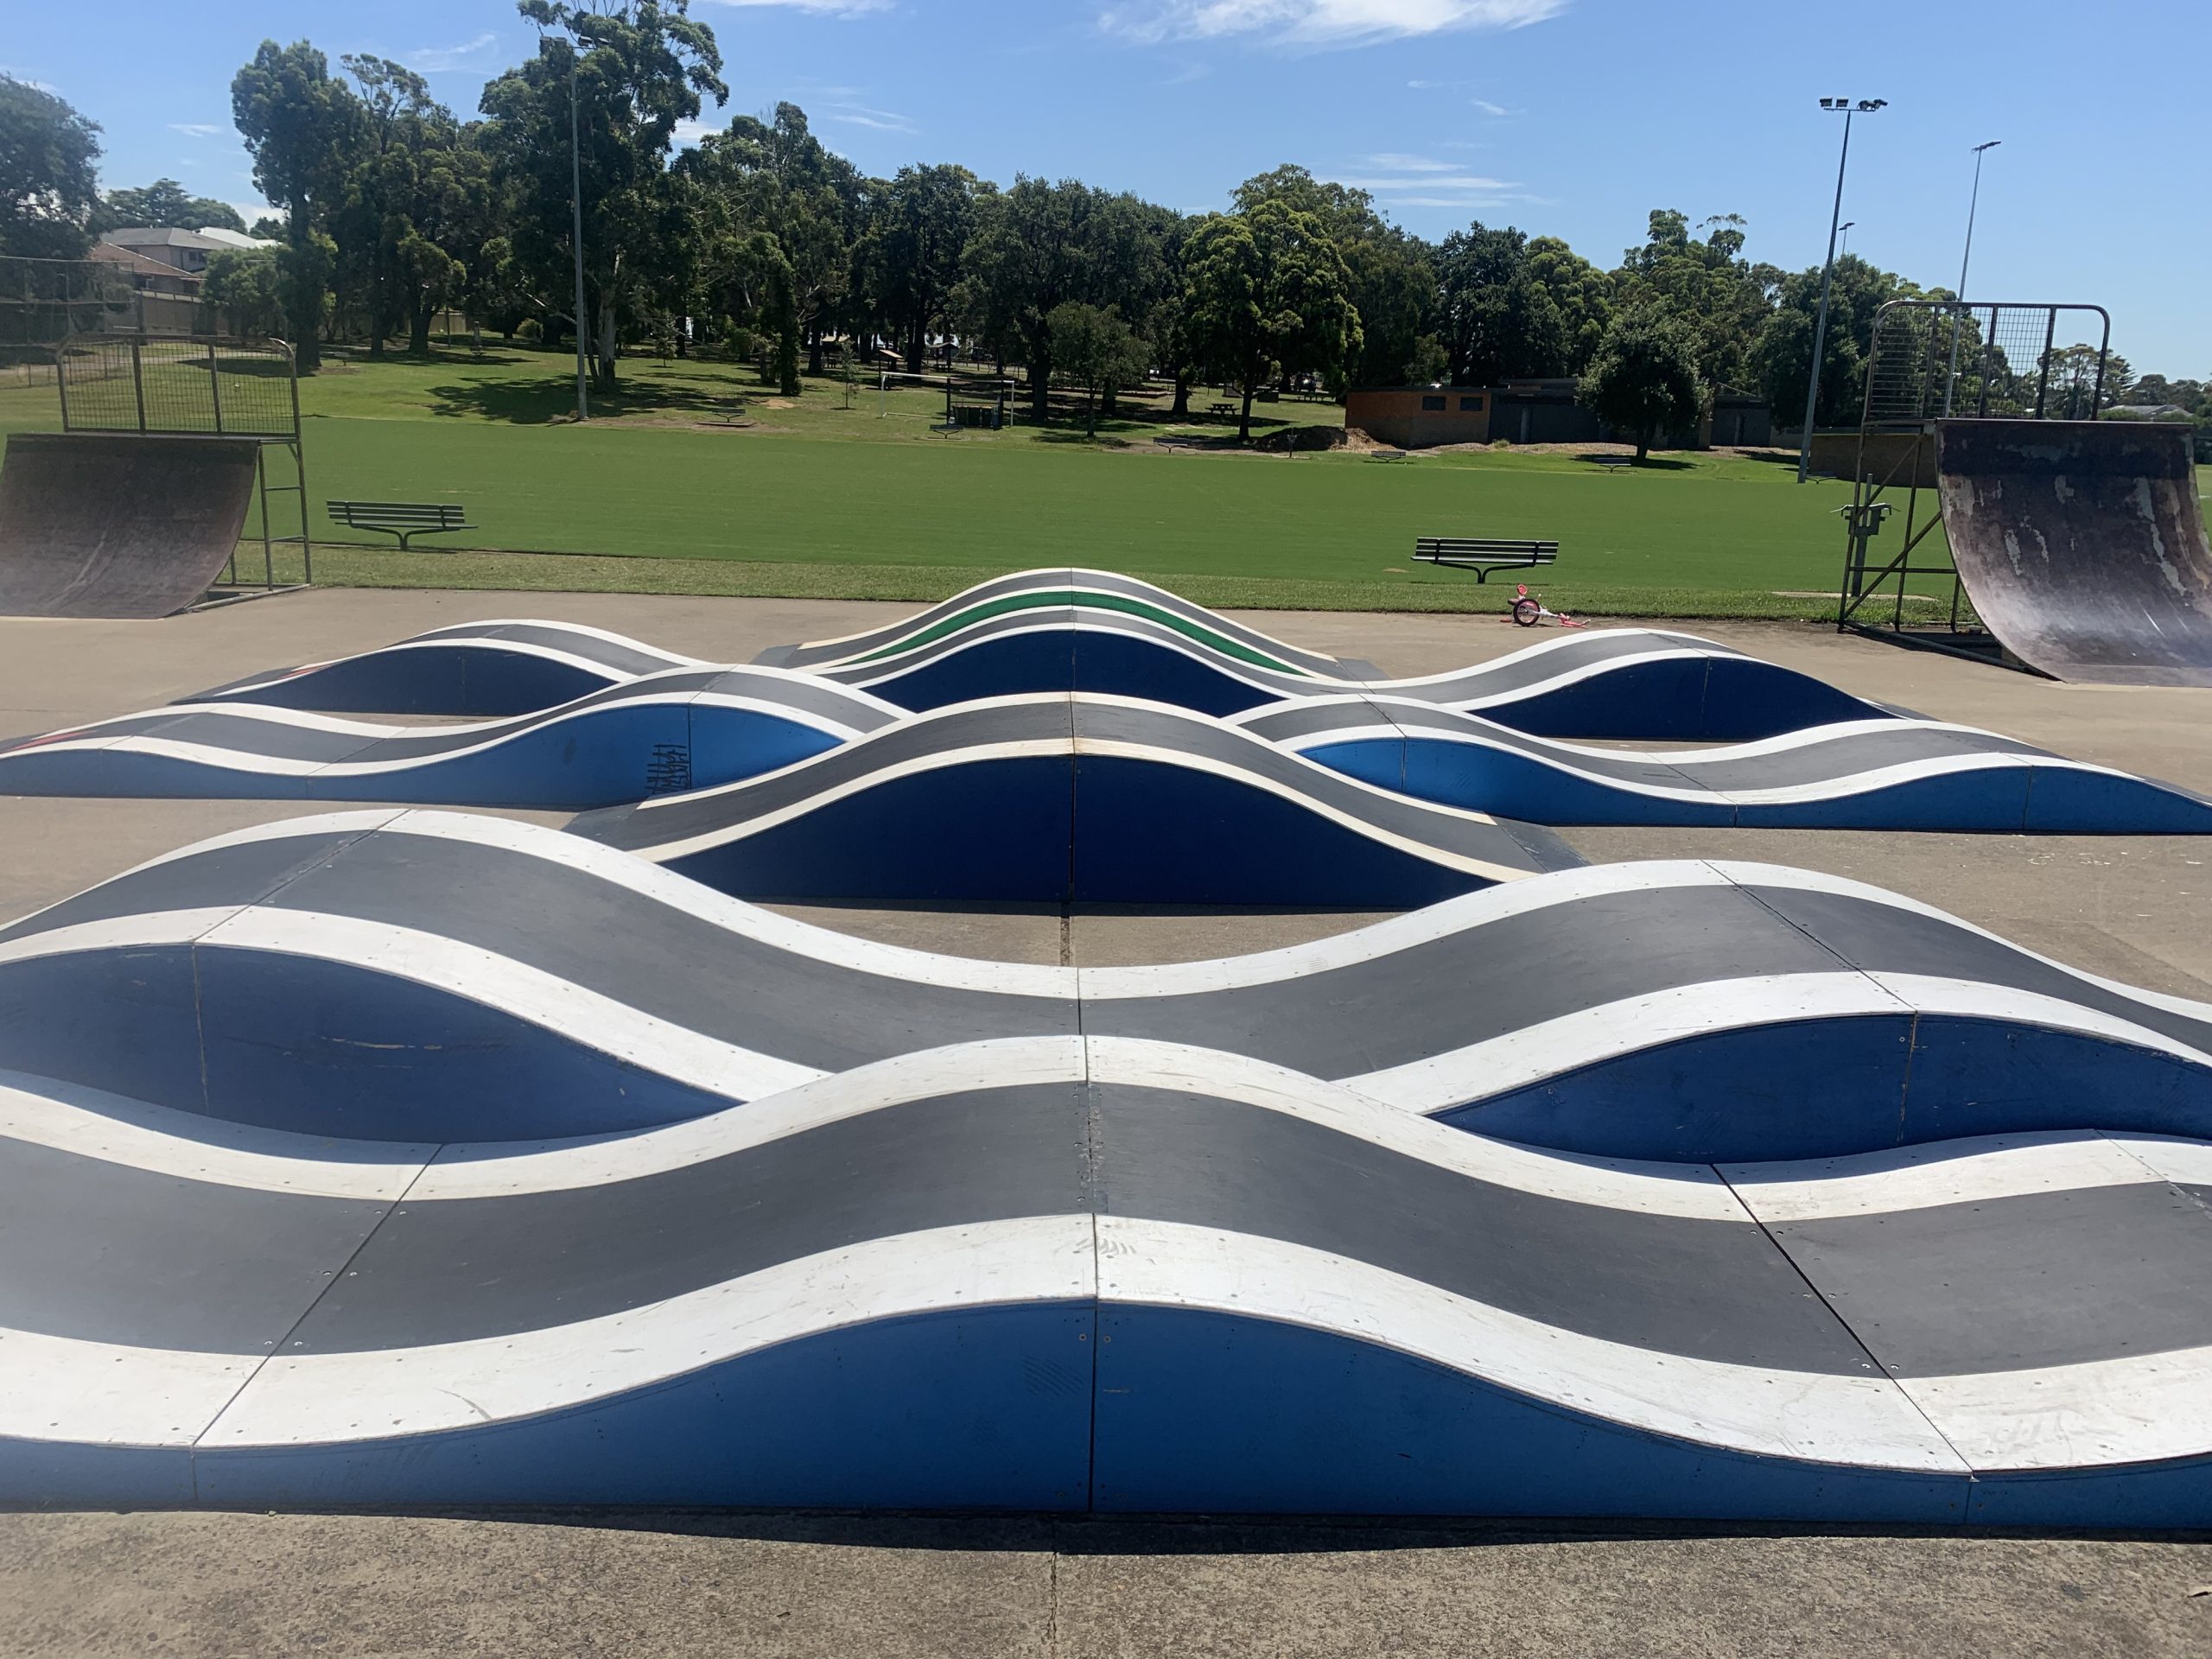 Custom pump track (sktaeboard ramp) in blue, black and white in a park.